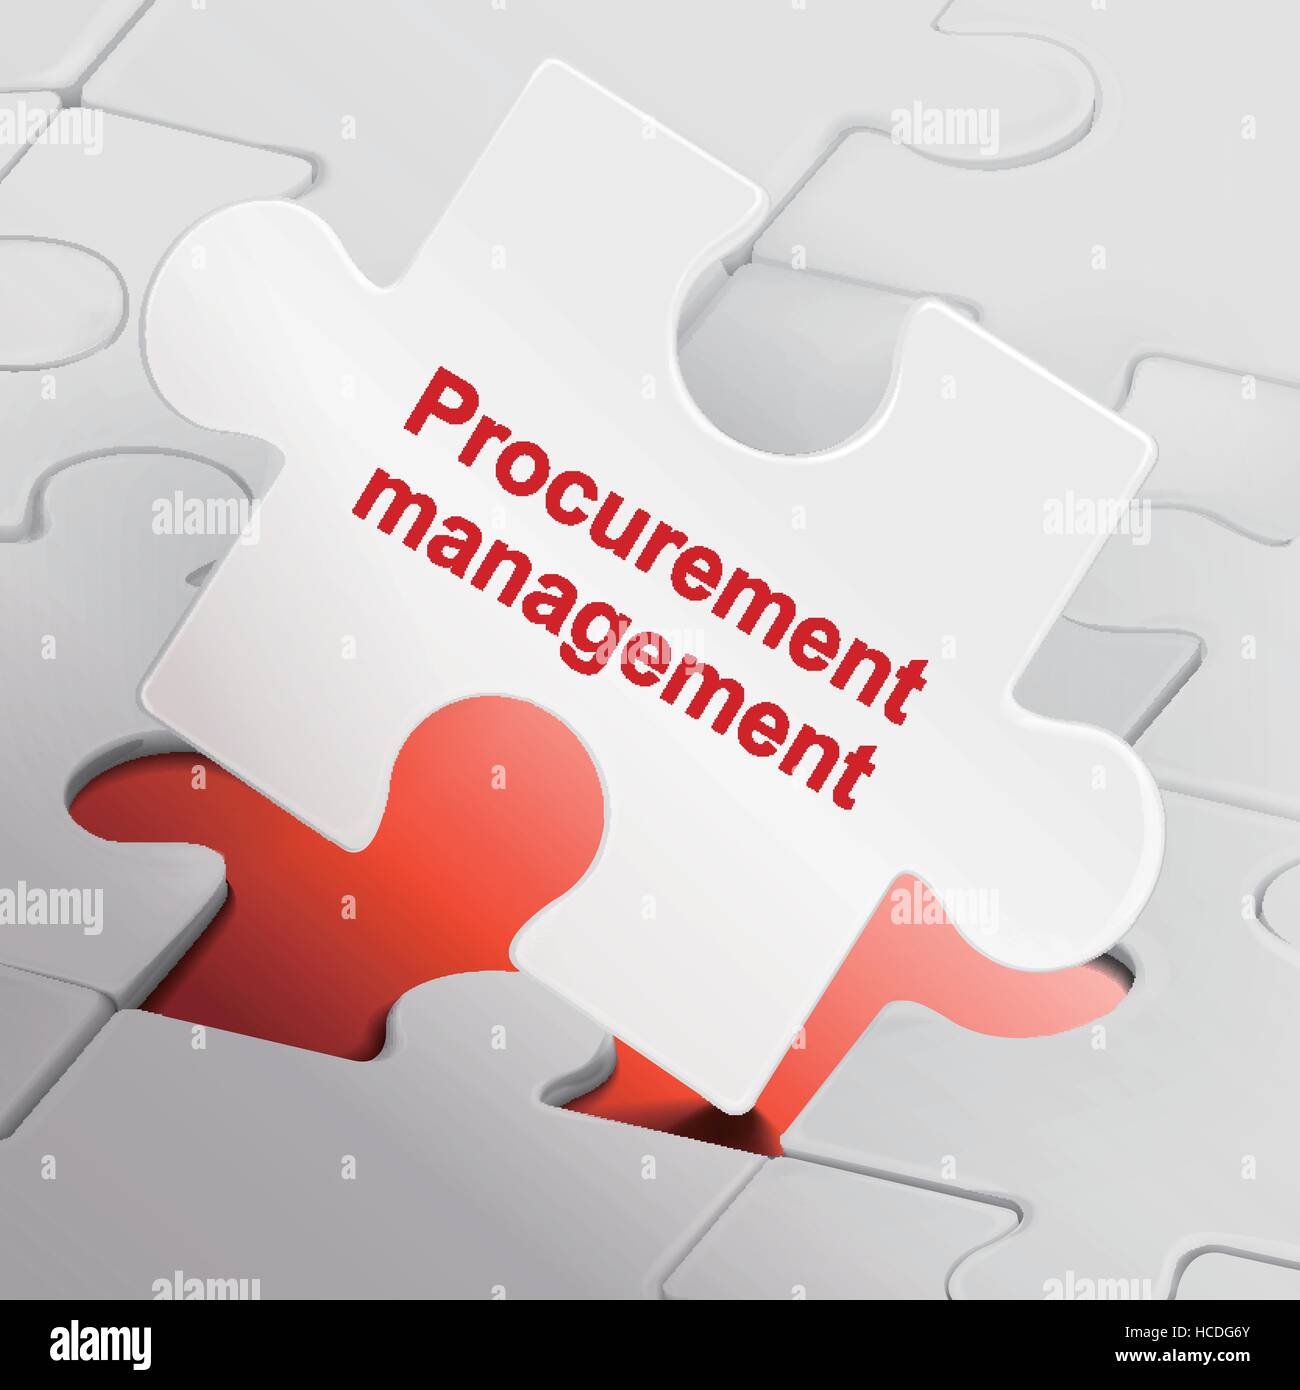 procurement management on white puzzle pieces background Stock Vector